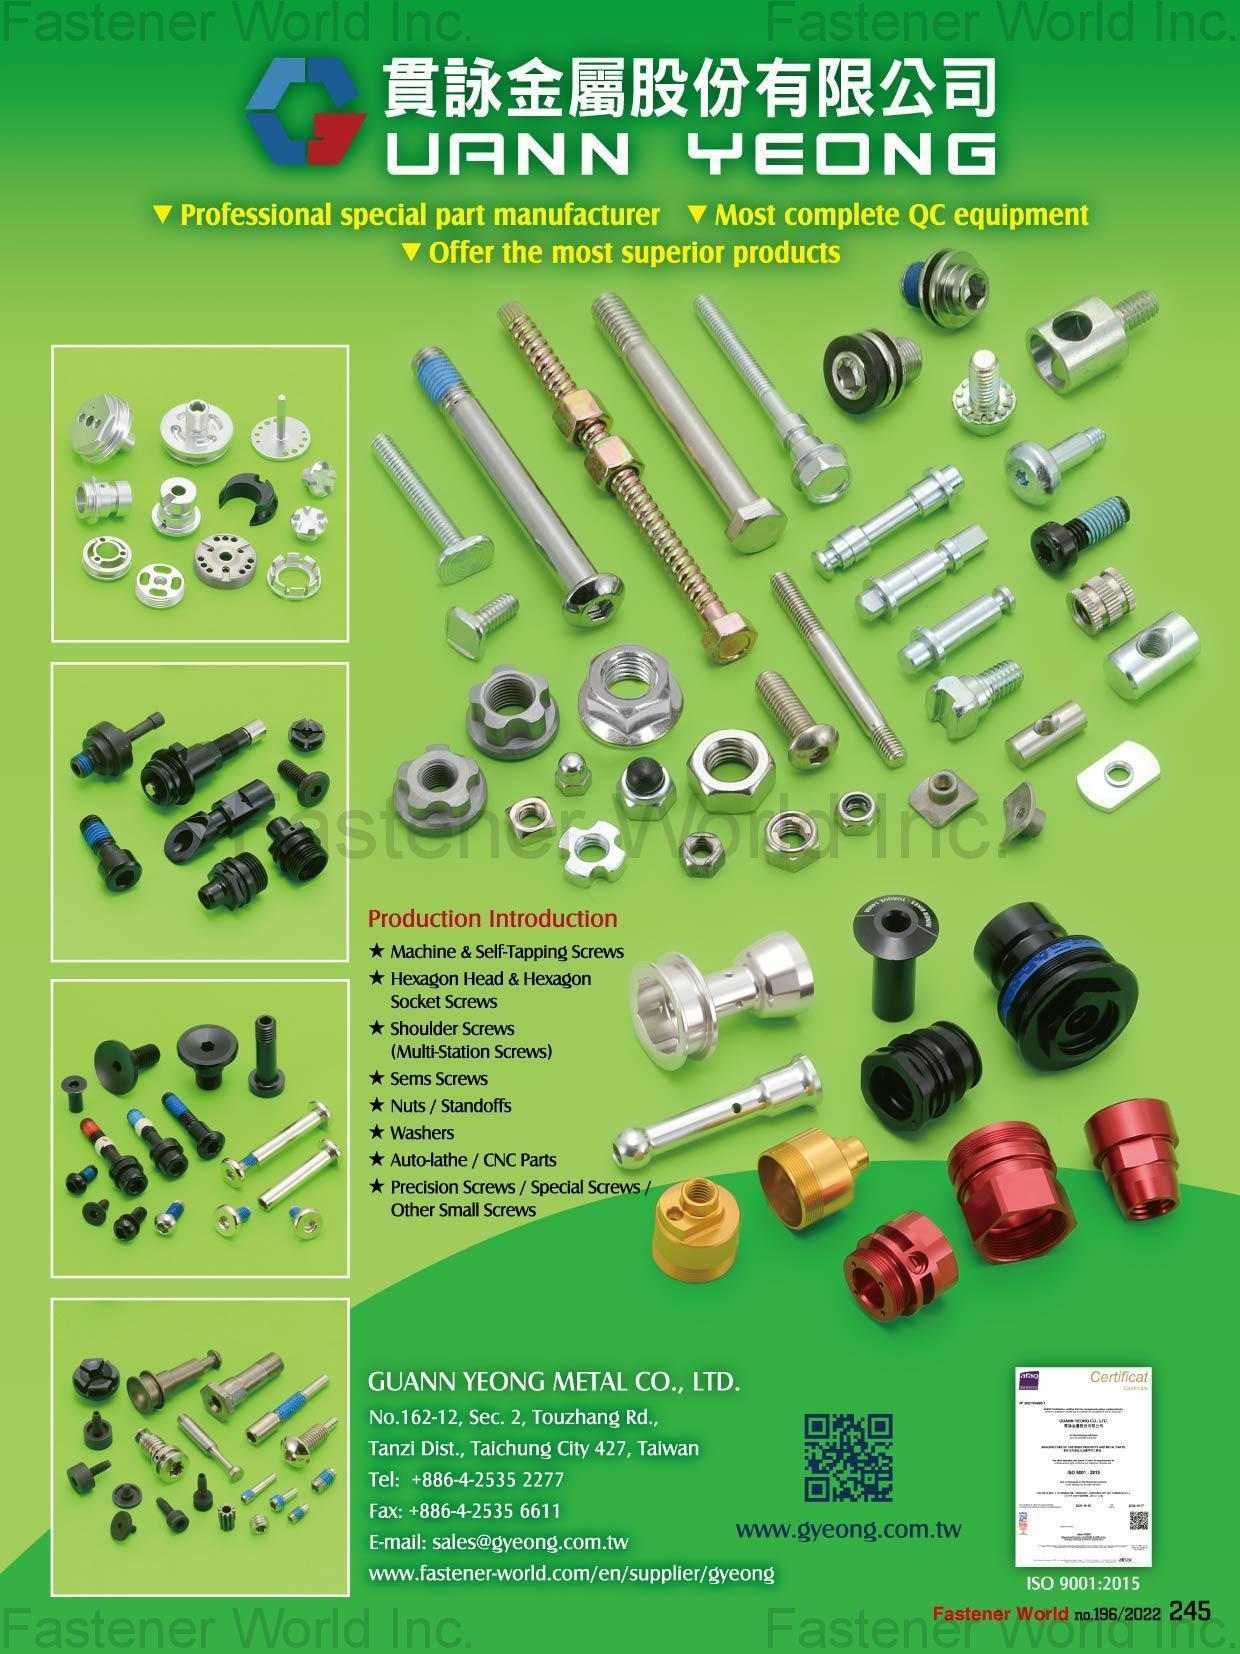 Guann Yeong Metal Co., Ltd. , Machine & Self-Tapping Screws, Hexagon Head & Hexagon Socket Screws, Shoulder Screws (Multi-Station Screws), Sems Screws, Nuts, Standoffs, Washers, Auto-lathe / CNC Parts, Precision Screws, Special Screws, Other Small Screws